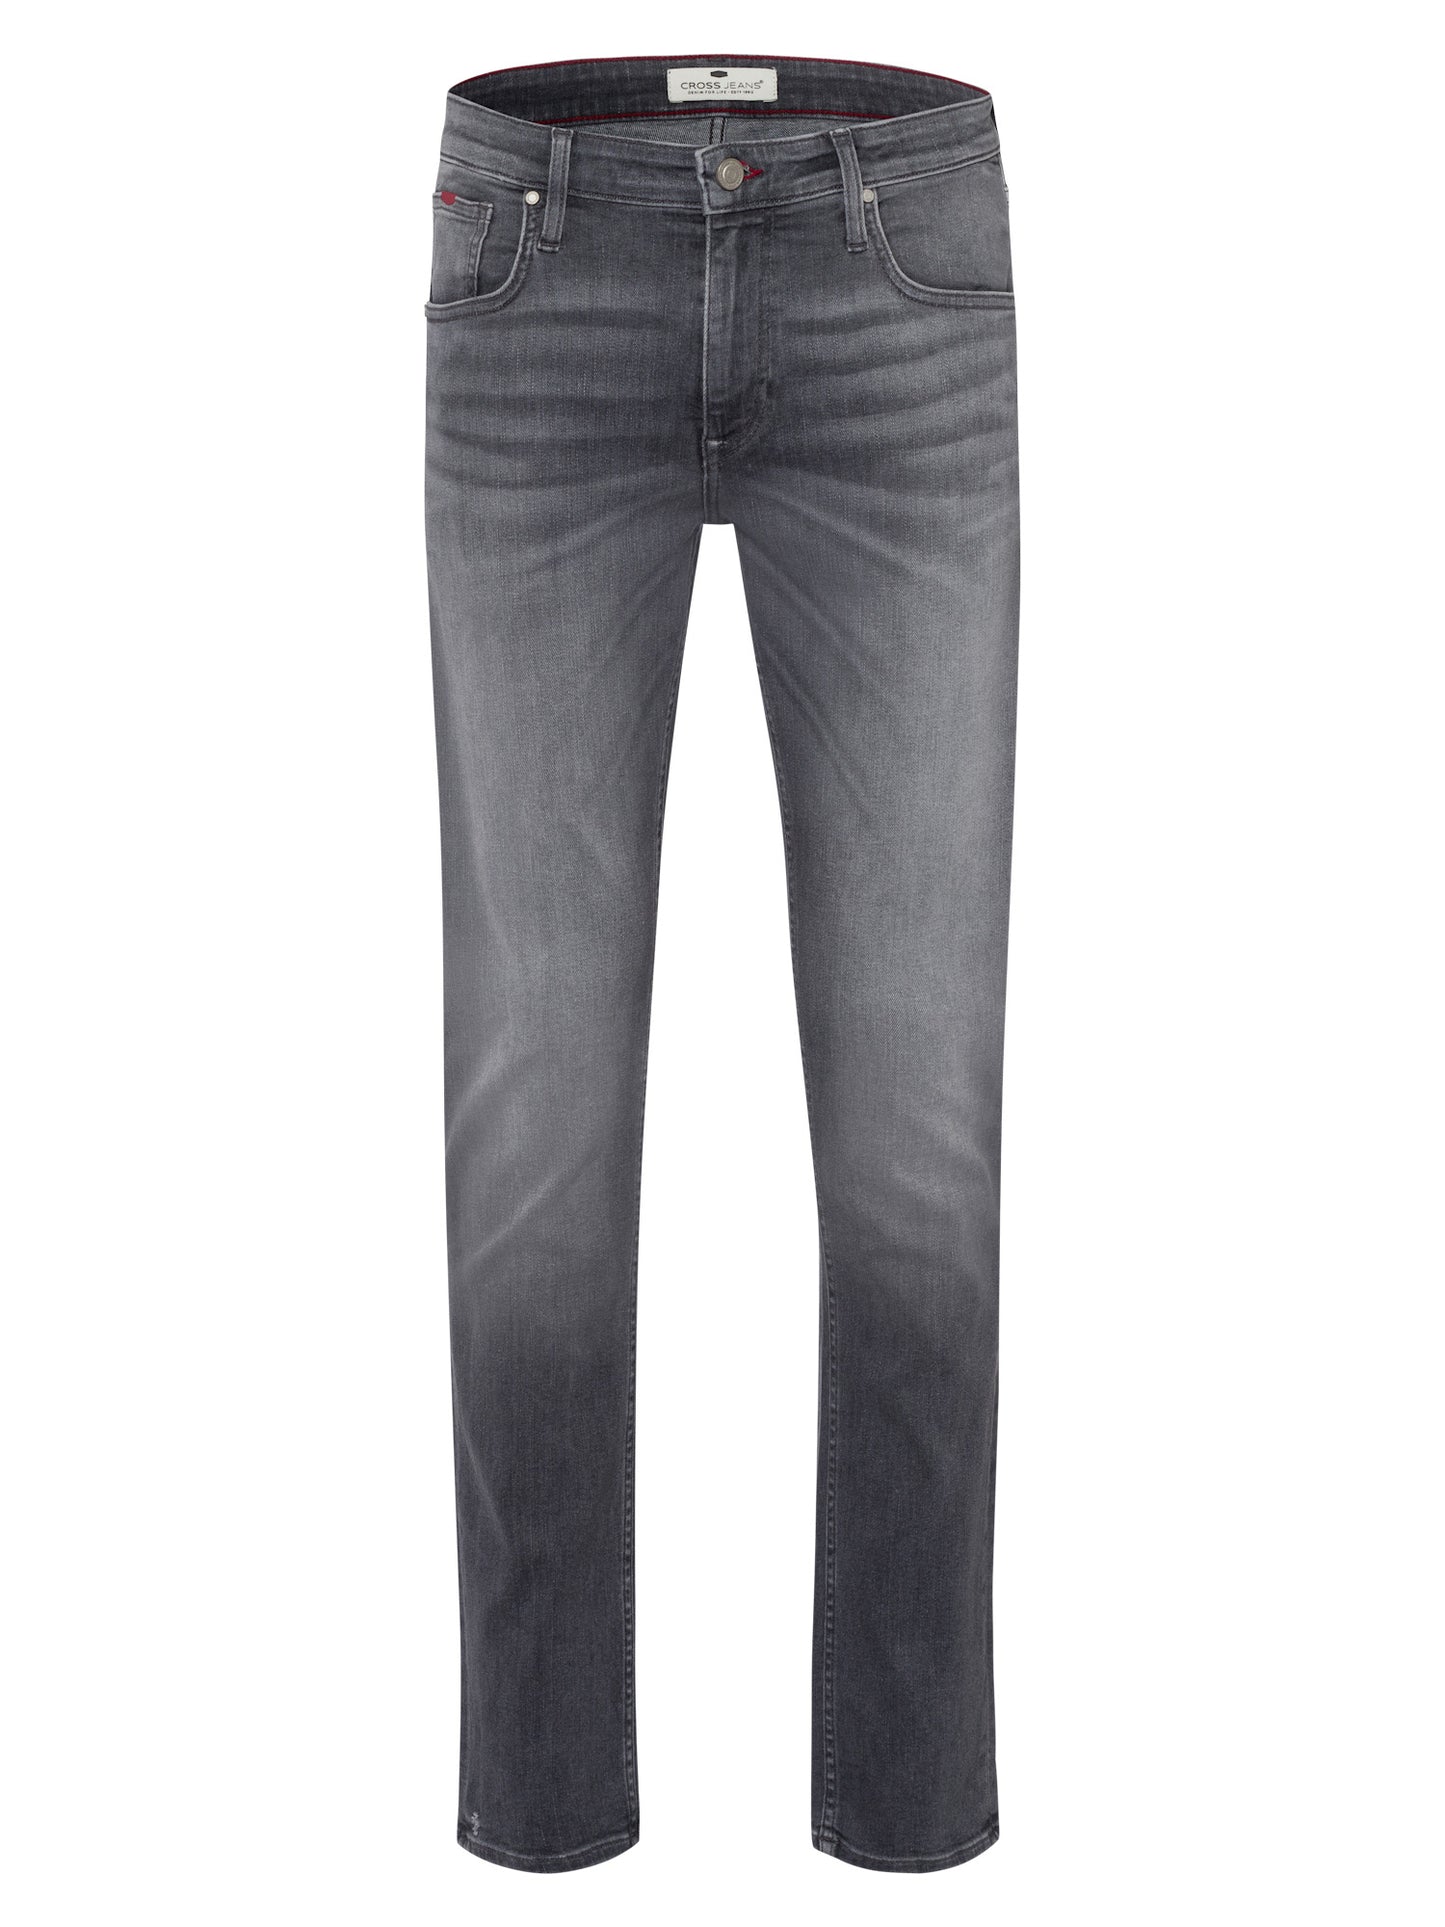 Damien Herren Jeans Slim Fit Regular Waist Straight Leg grau